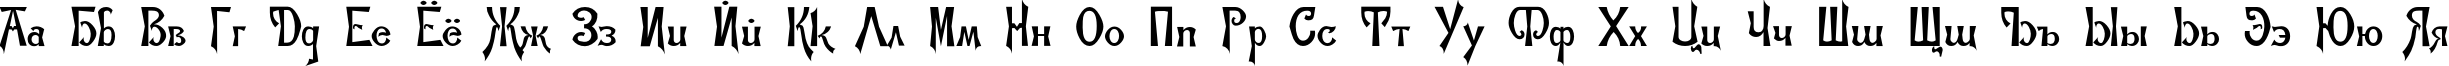 Пример написания русского алфавита шрифтом Abbat TYGRA